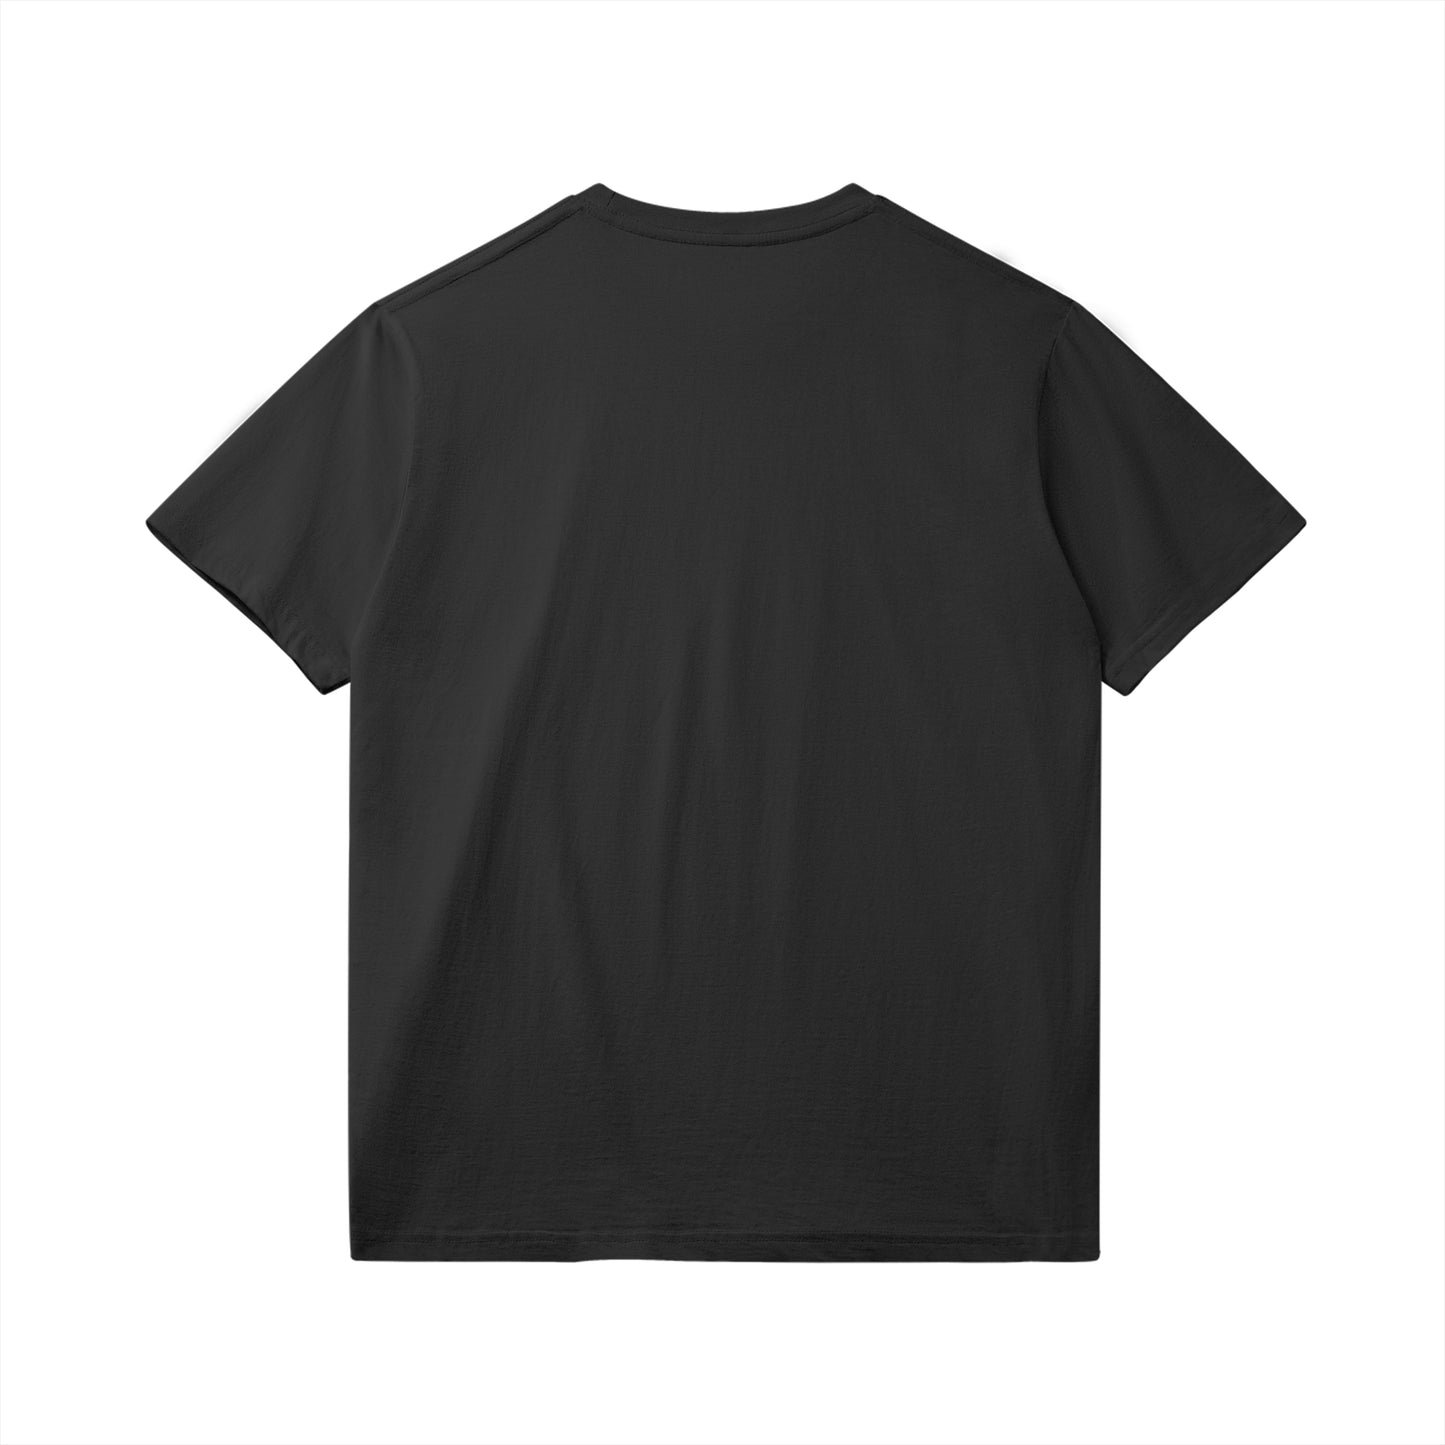 XO SMILE (BACK PRINT) - Unisex Lightweight Classic T-shirt